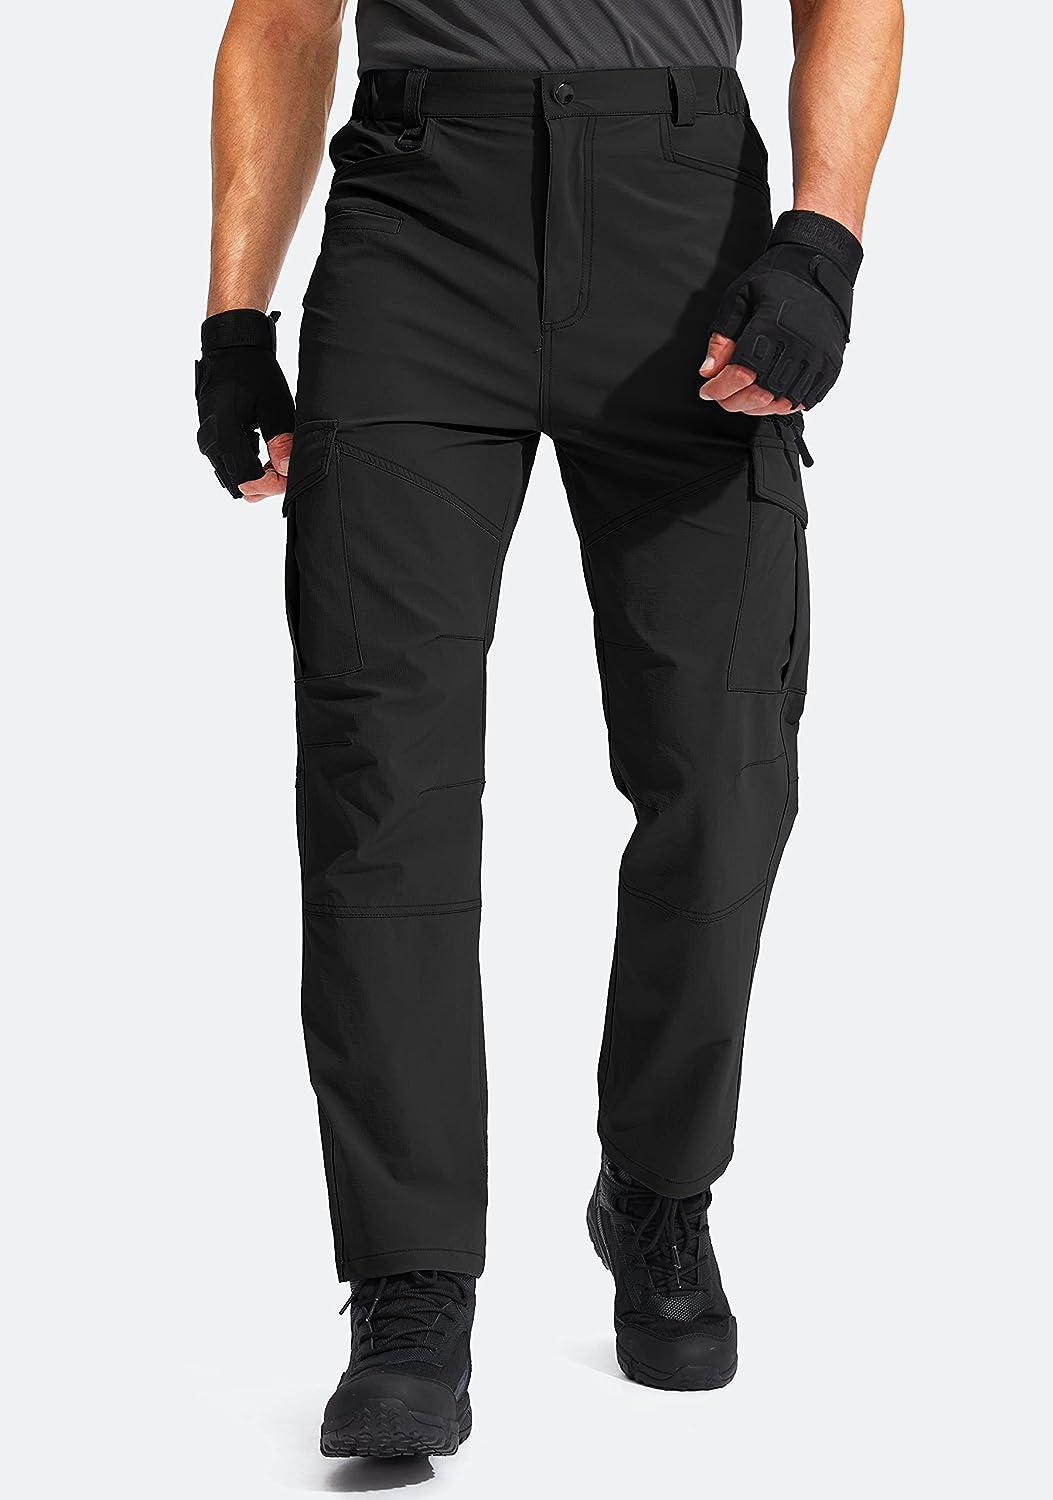 G Gradual Men's Ripstop Tactical Cargo Pants with Multi Pocket Waterproof  Stretch Hiking Pants for Men Work Outdoor